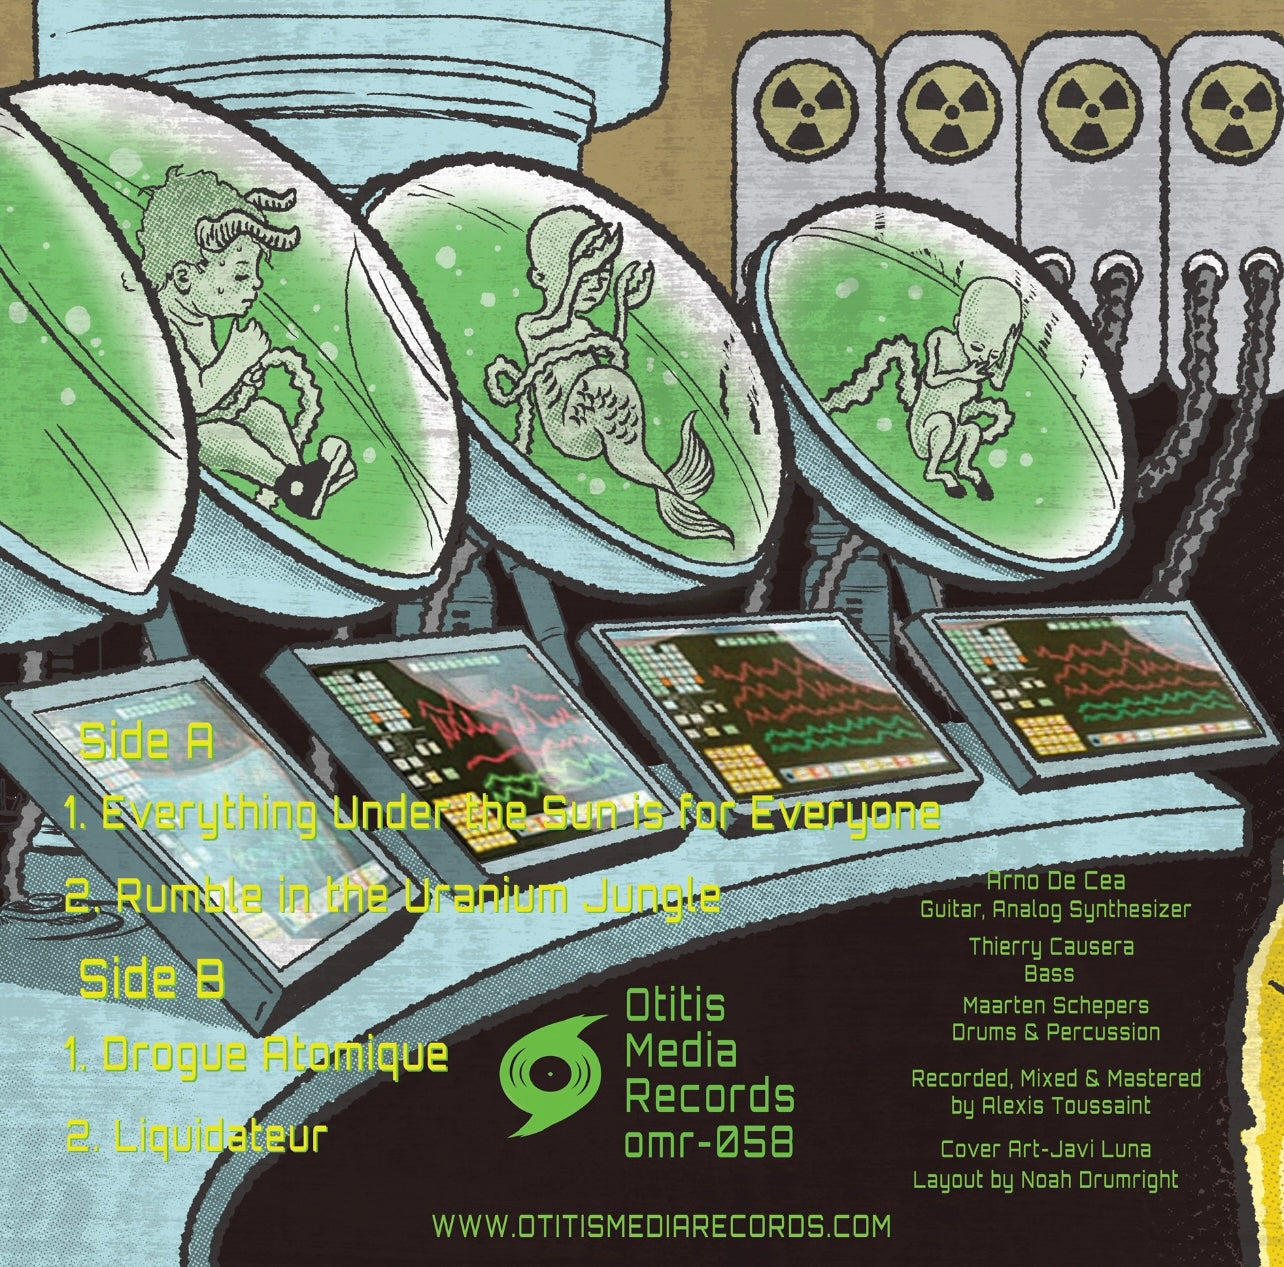 OMR-058 Arno De Cea & The Clockwork Wizards “Rumble in the Uranium Jungle” 7” EP